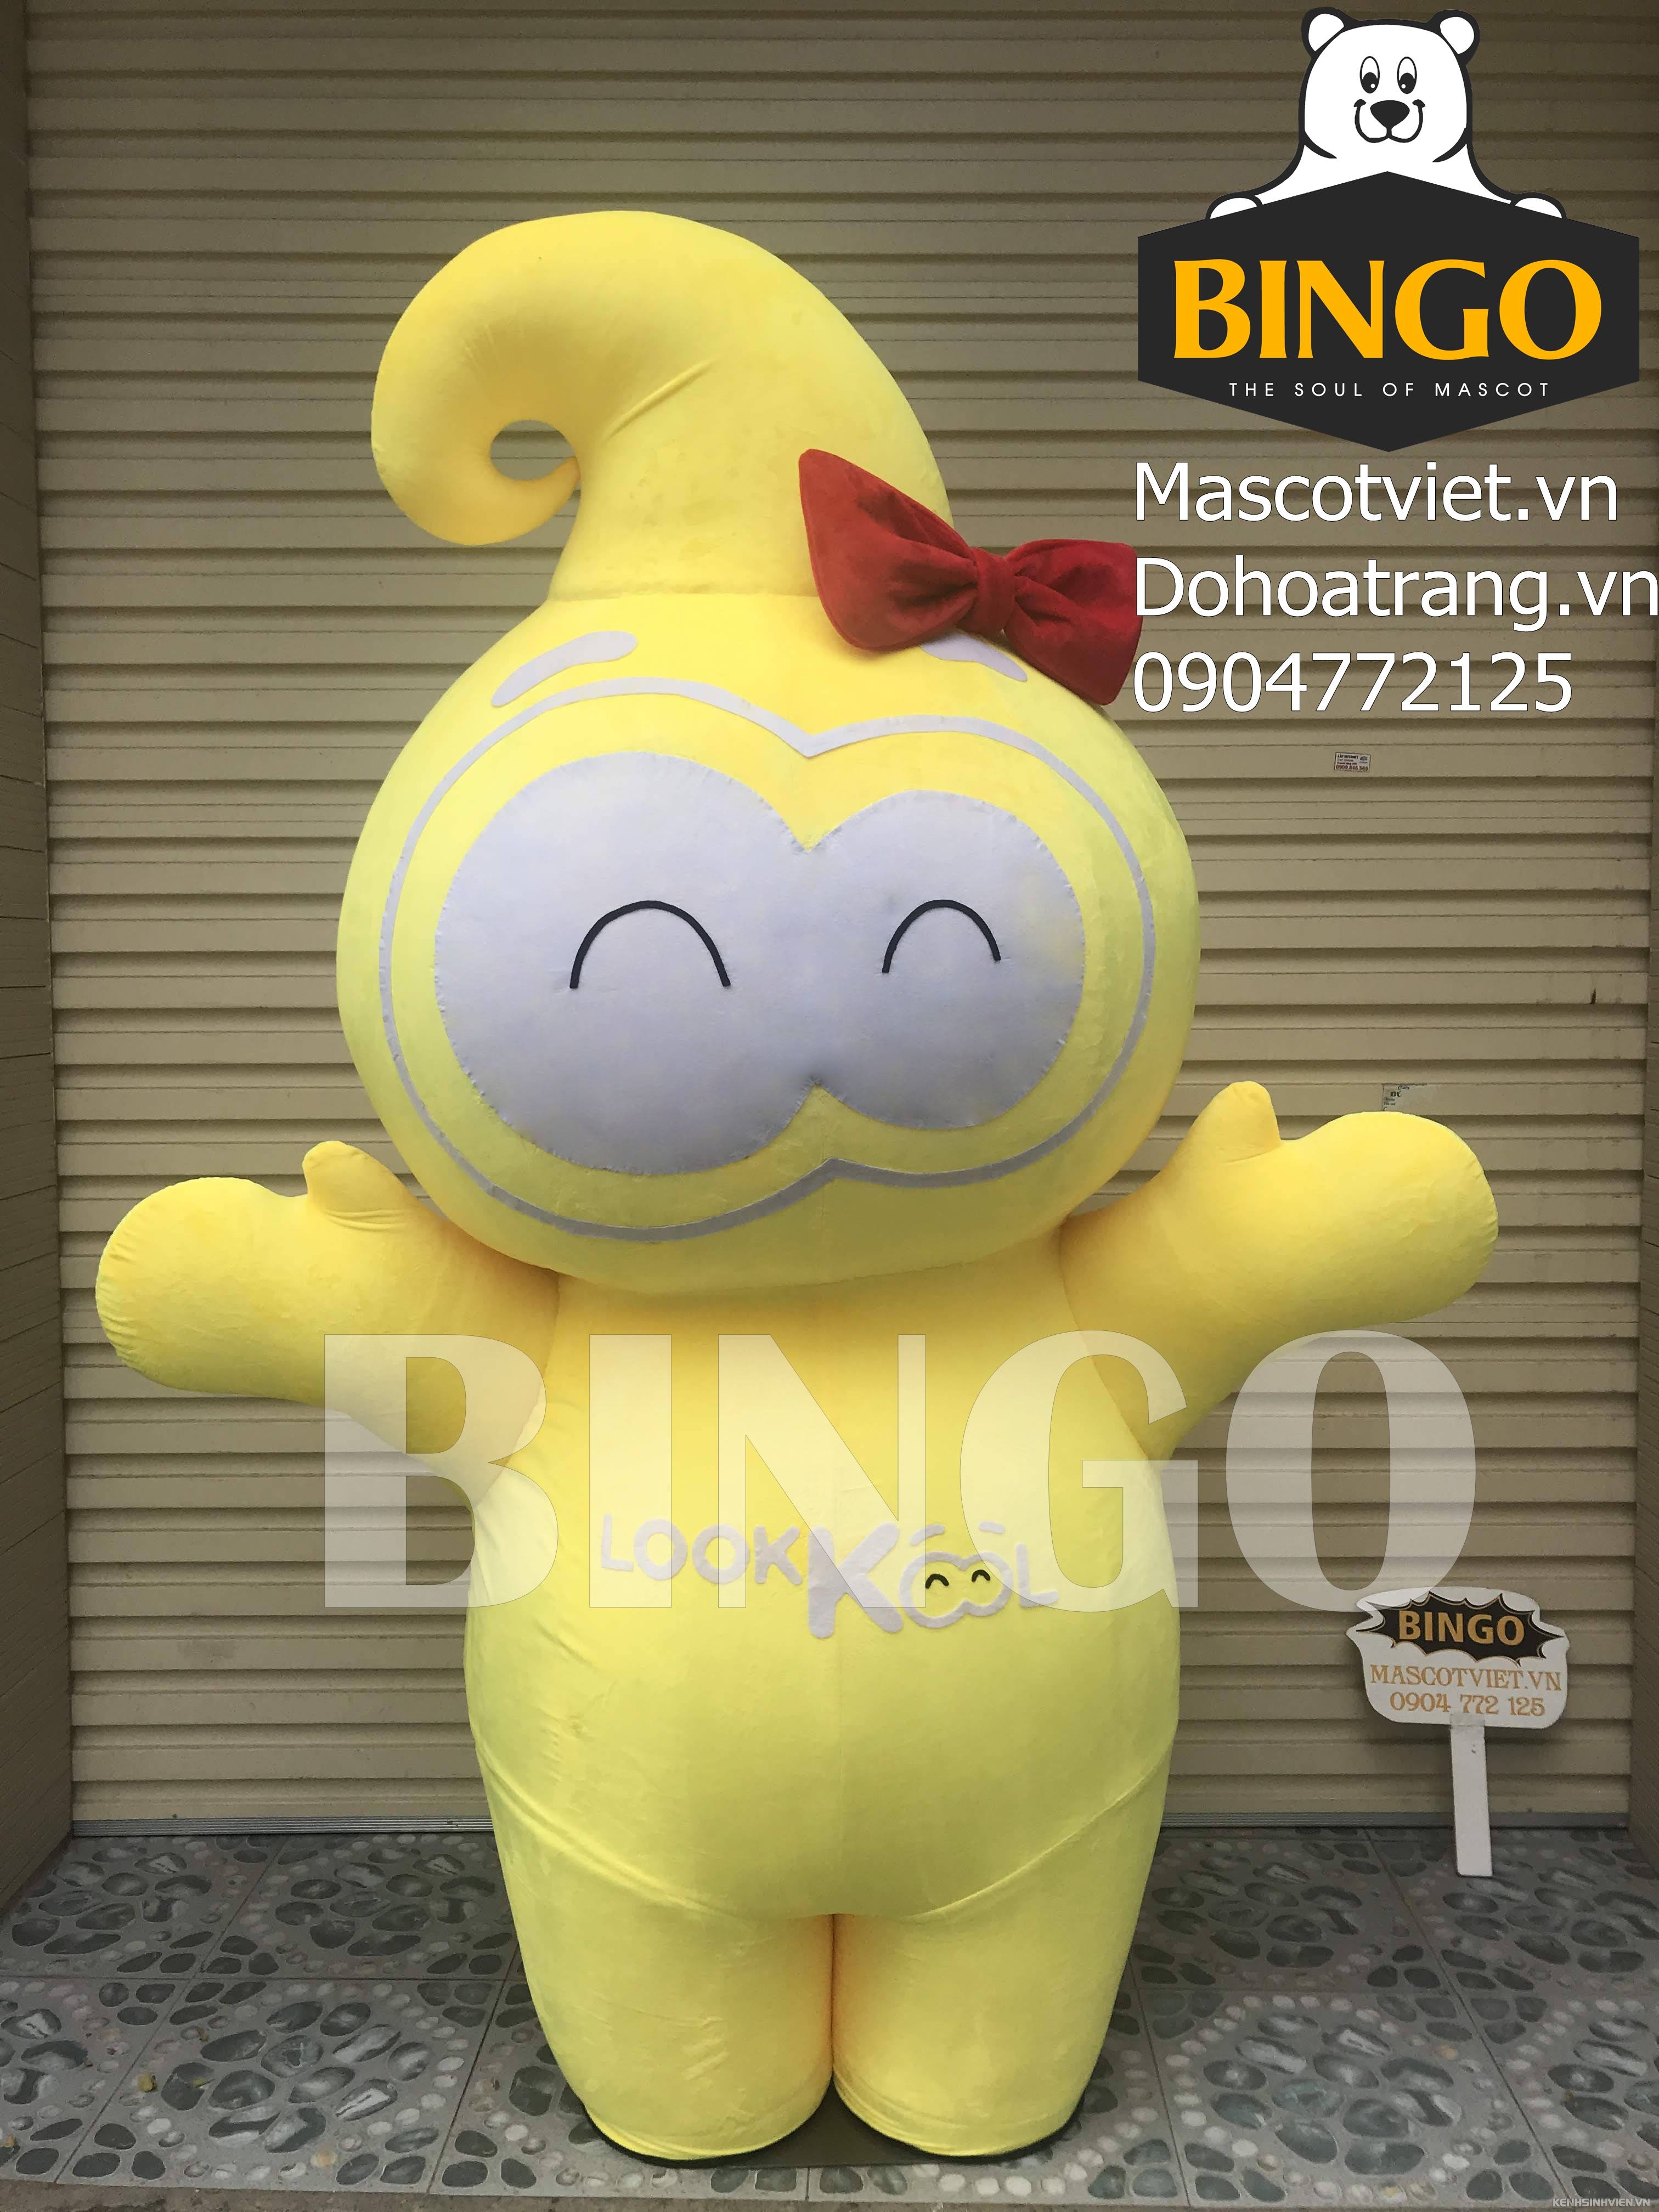 mo-hinh-trung-bay-look-kool-bingo-costumes-0904772125.jpg